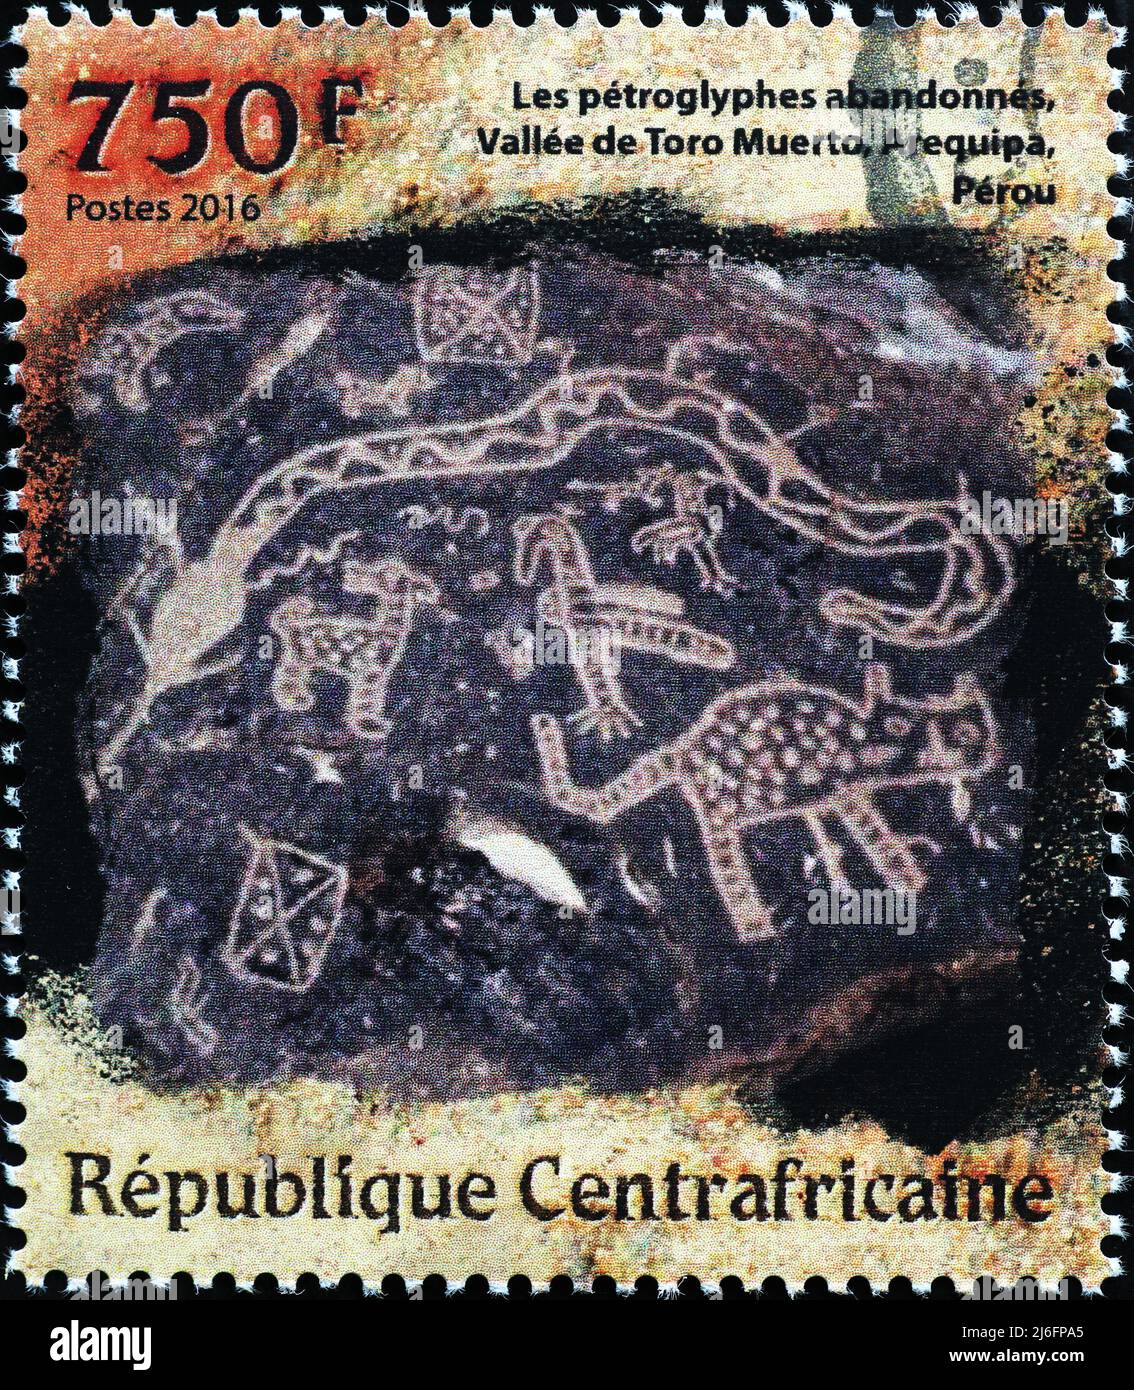 Peruvian prehistoric petroglyphs on postage stamp Stock Photo